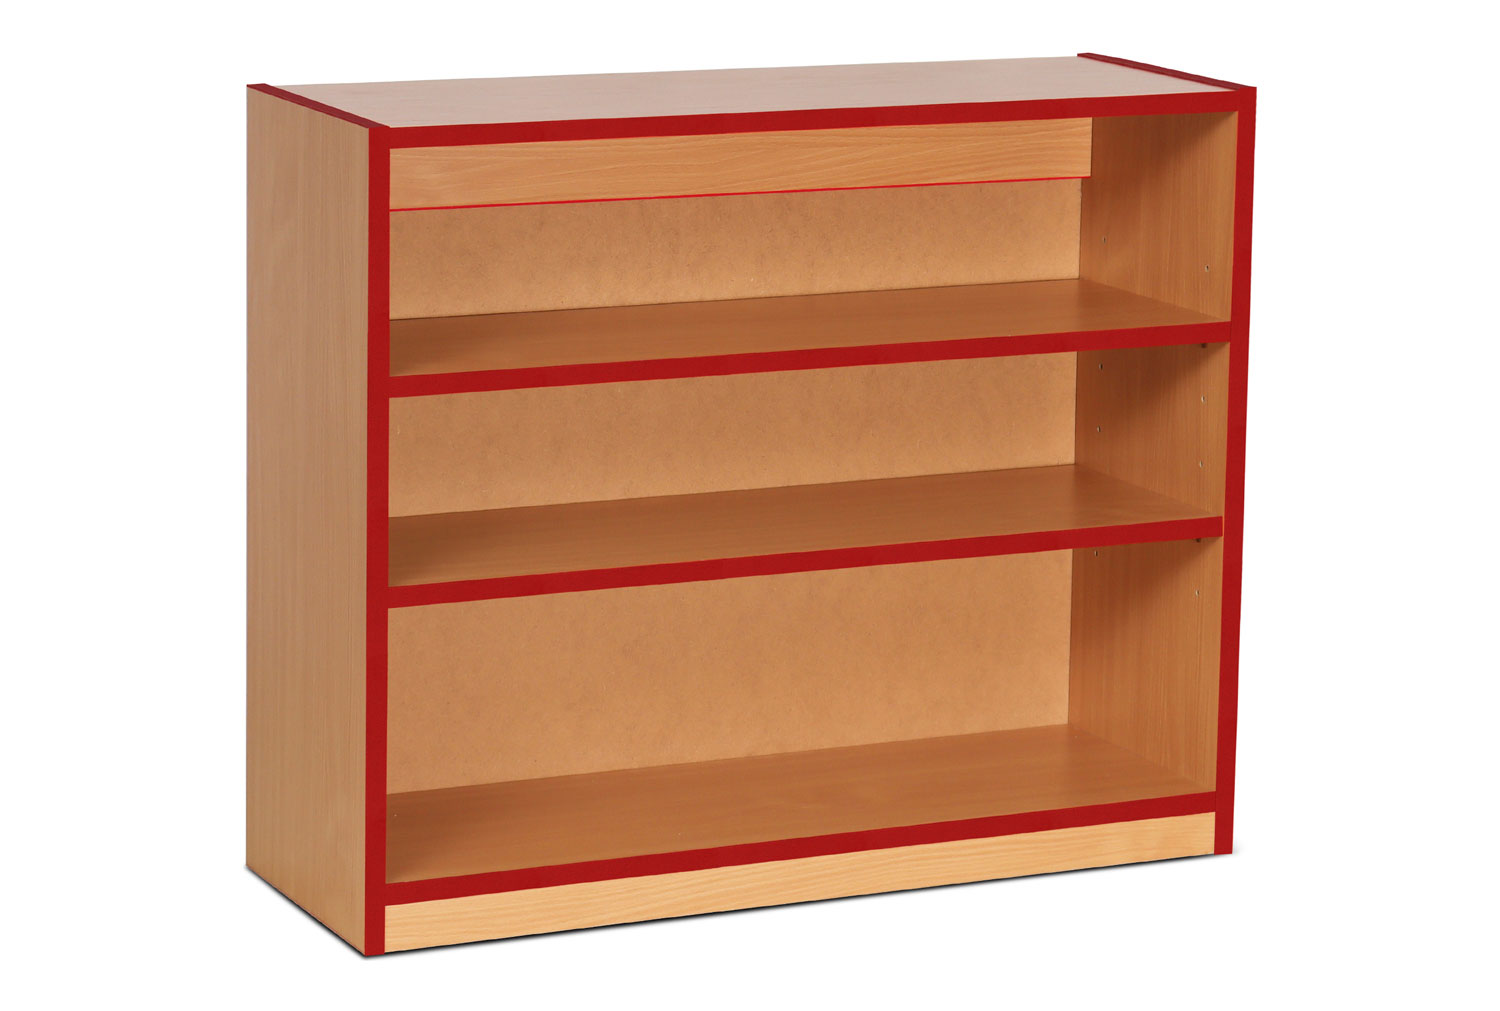 2 Shelf Coloured Edge Classroom Bookcase, Beech With Red Edge